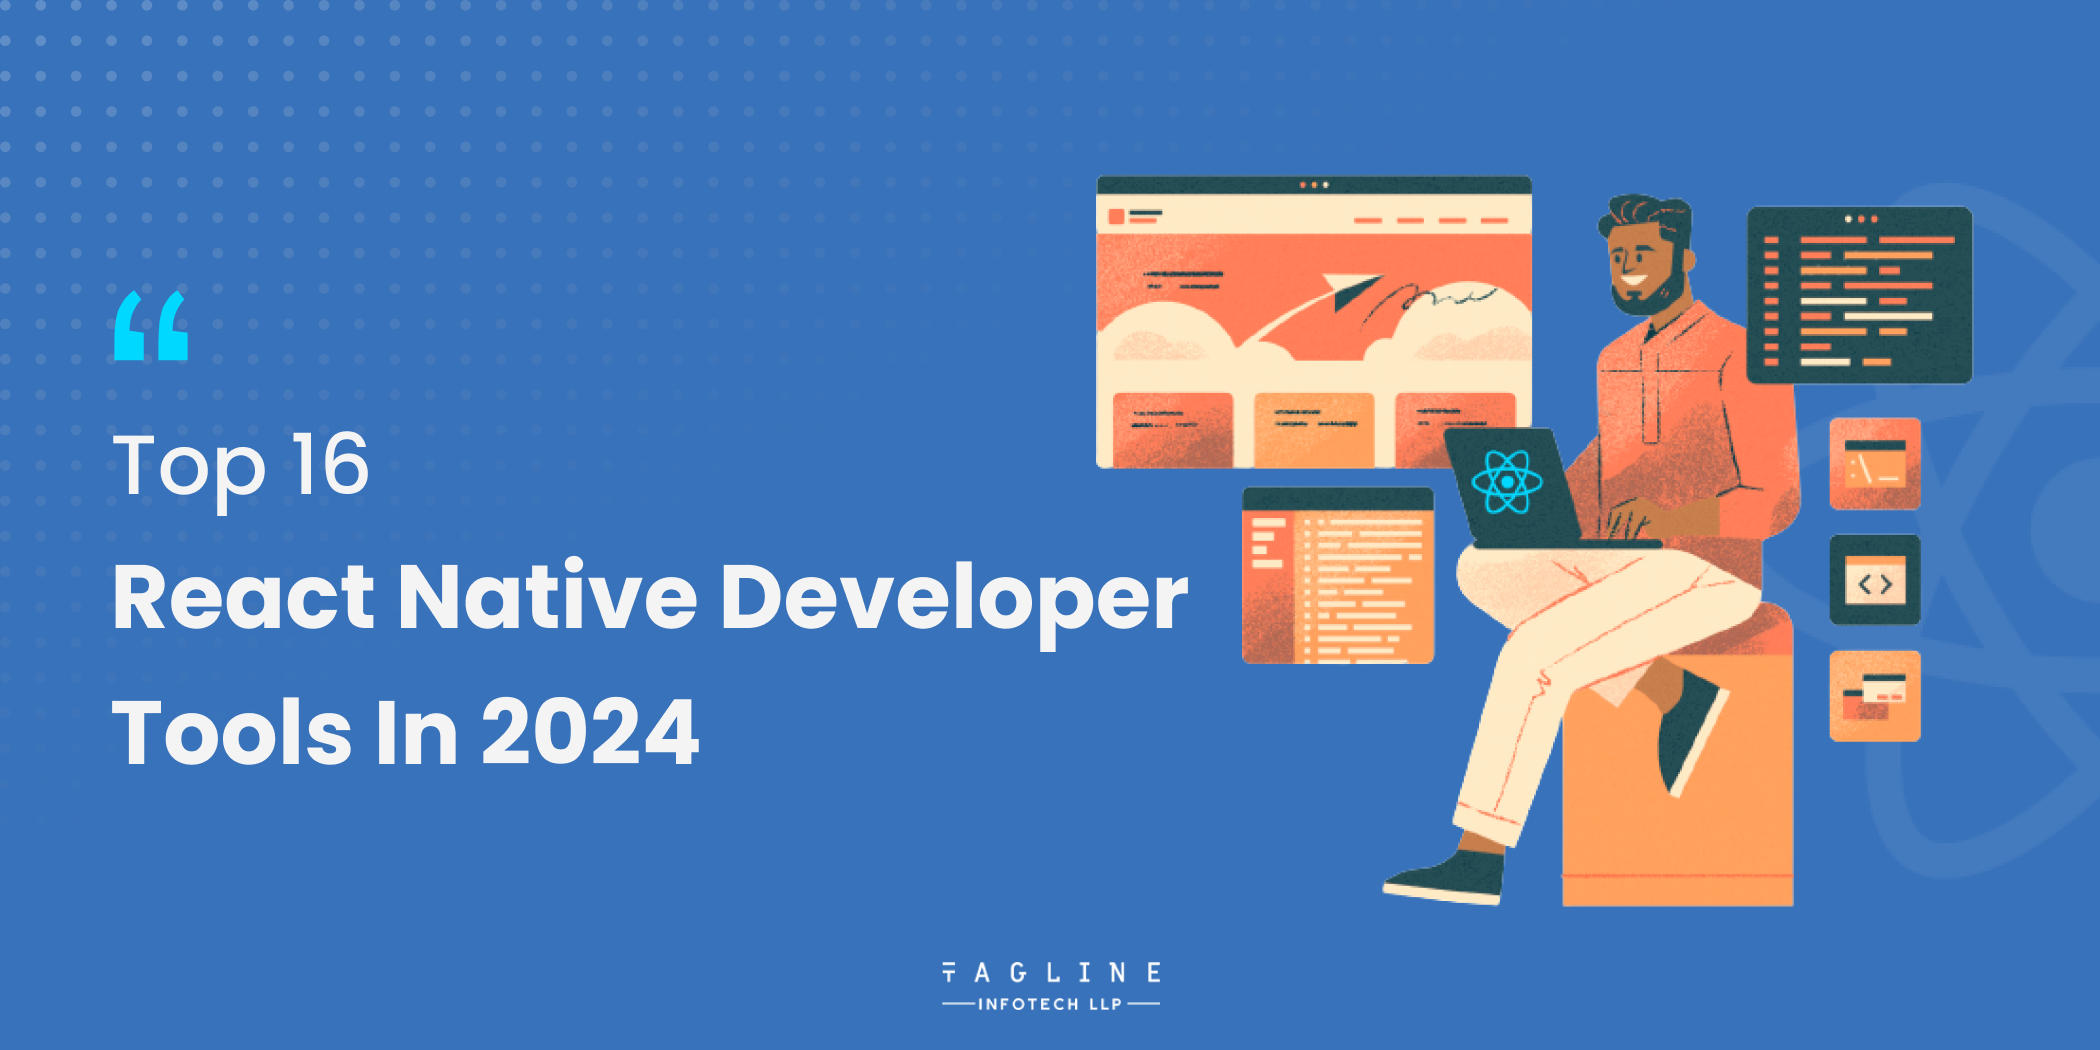 Top 16 React Native Developer Tools in 2024